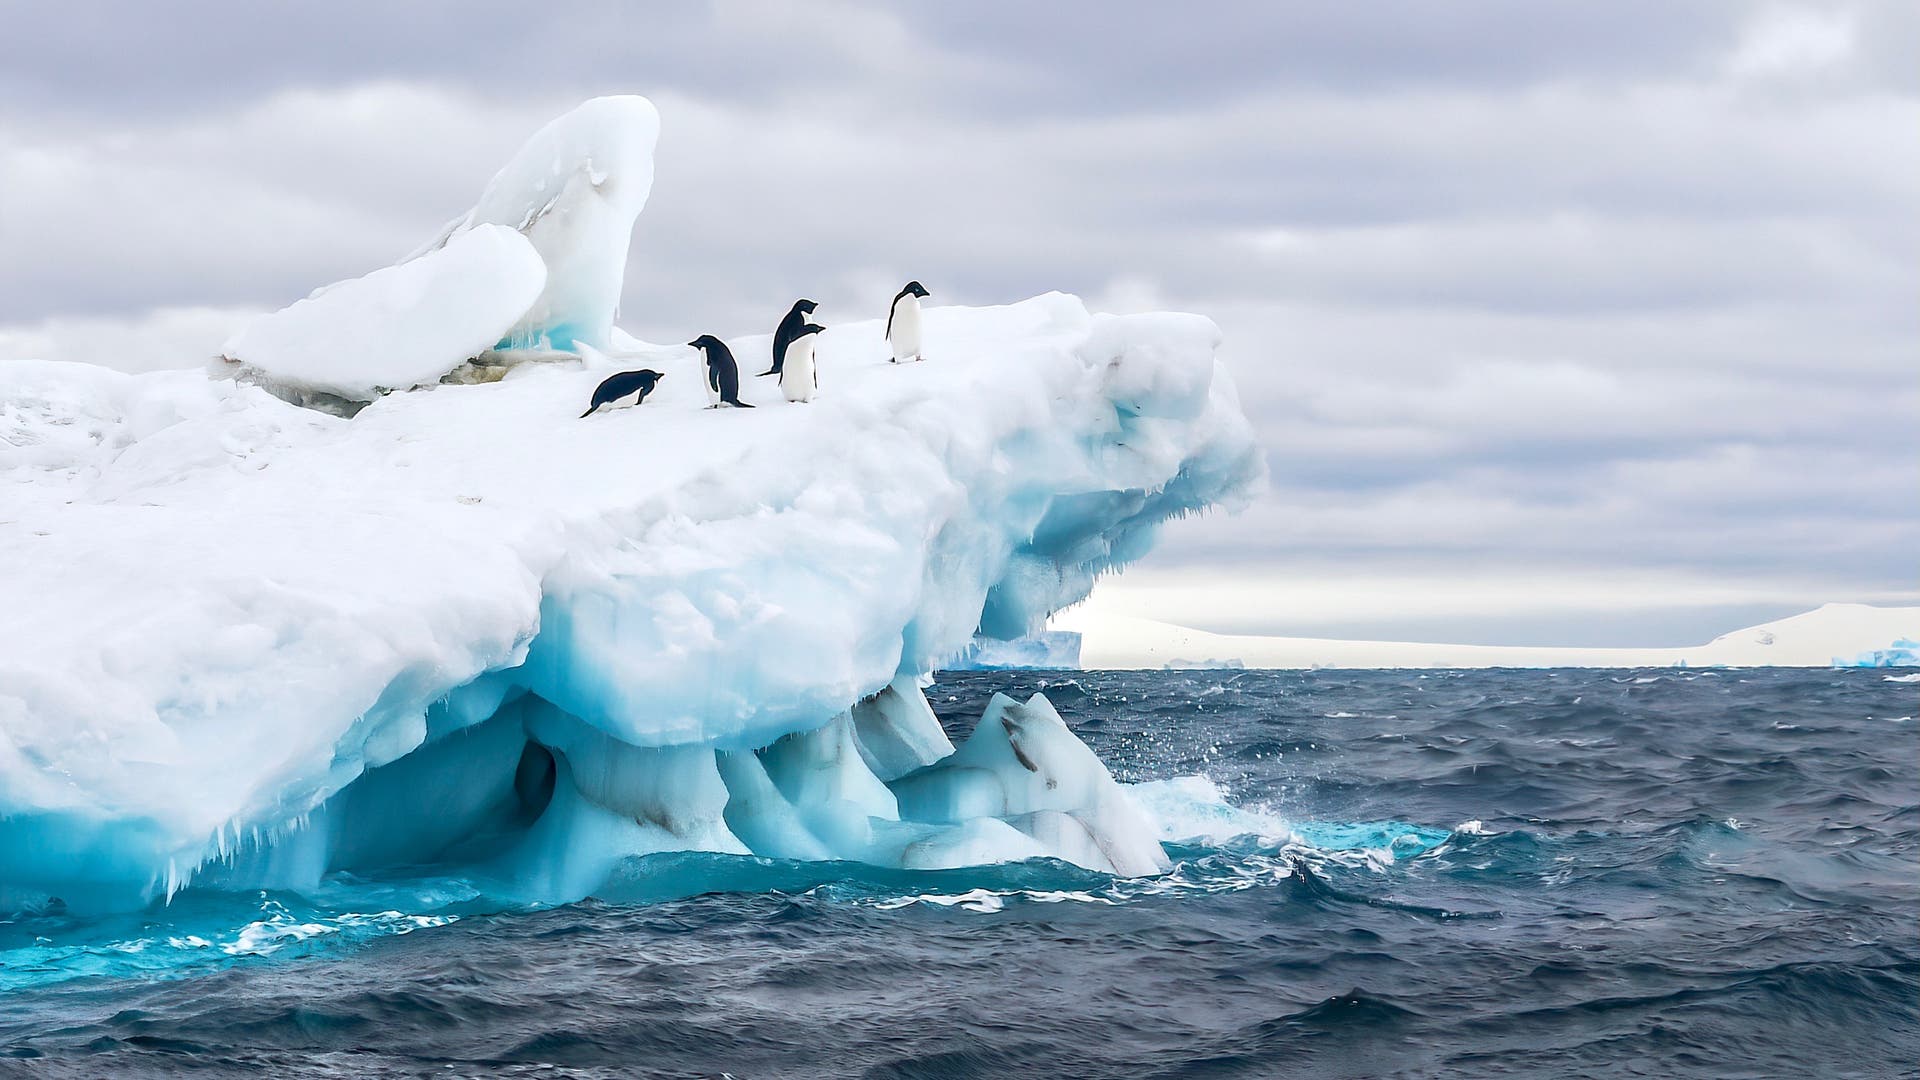 CCAMLR Conference: No New Marine Protected Areas in Antarctica